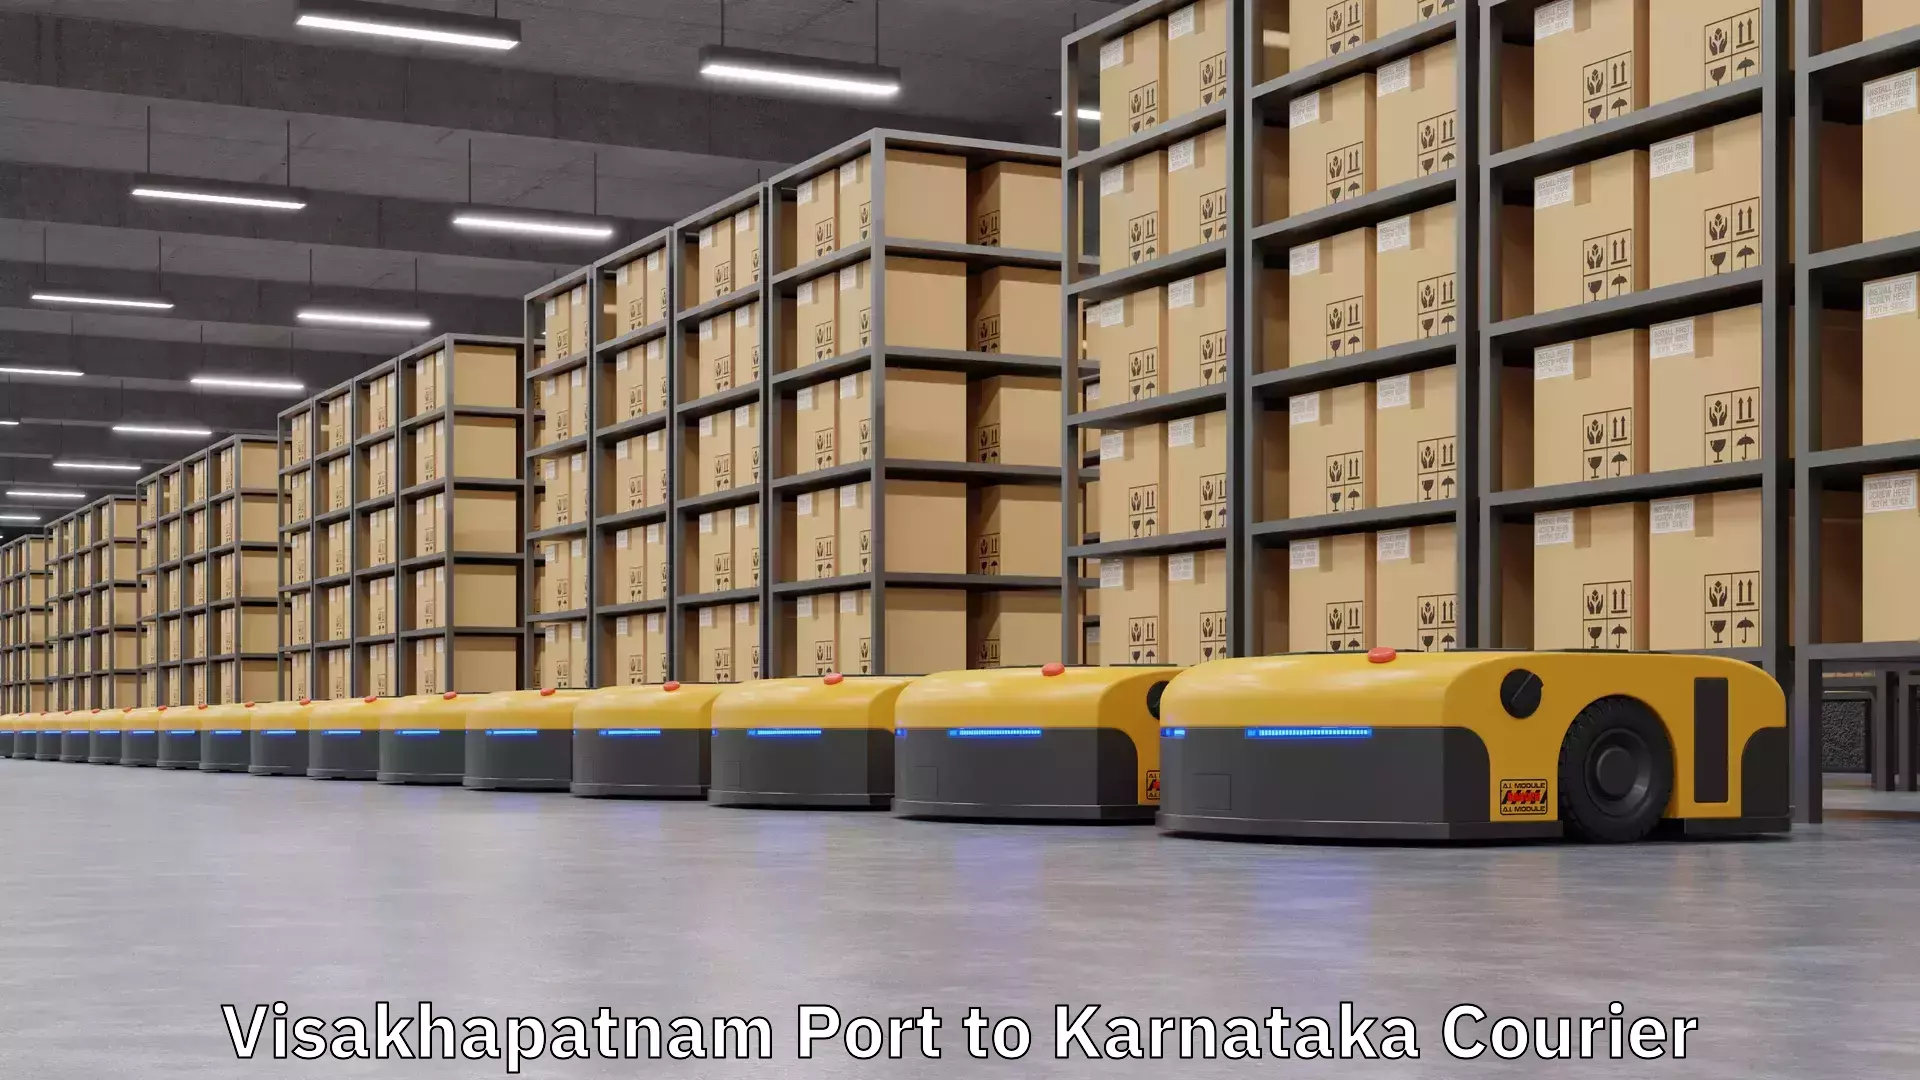 Reliable courier service Visakhapatnam Port to Karnataka